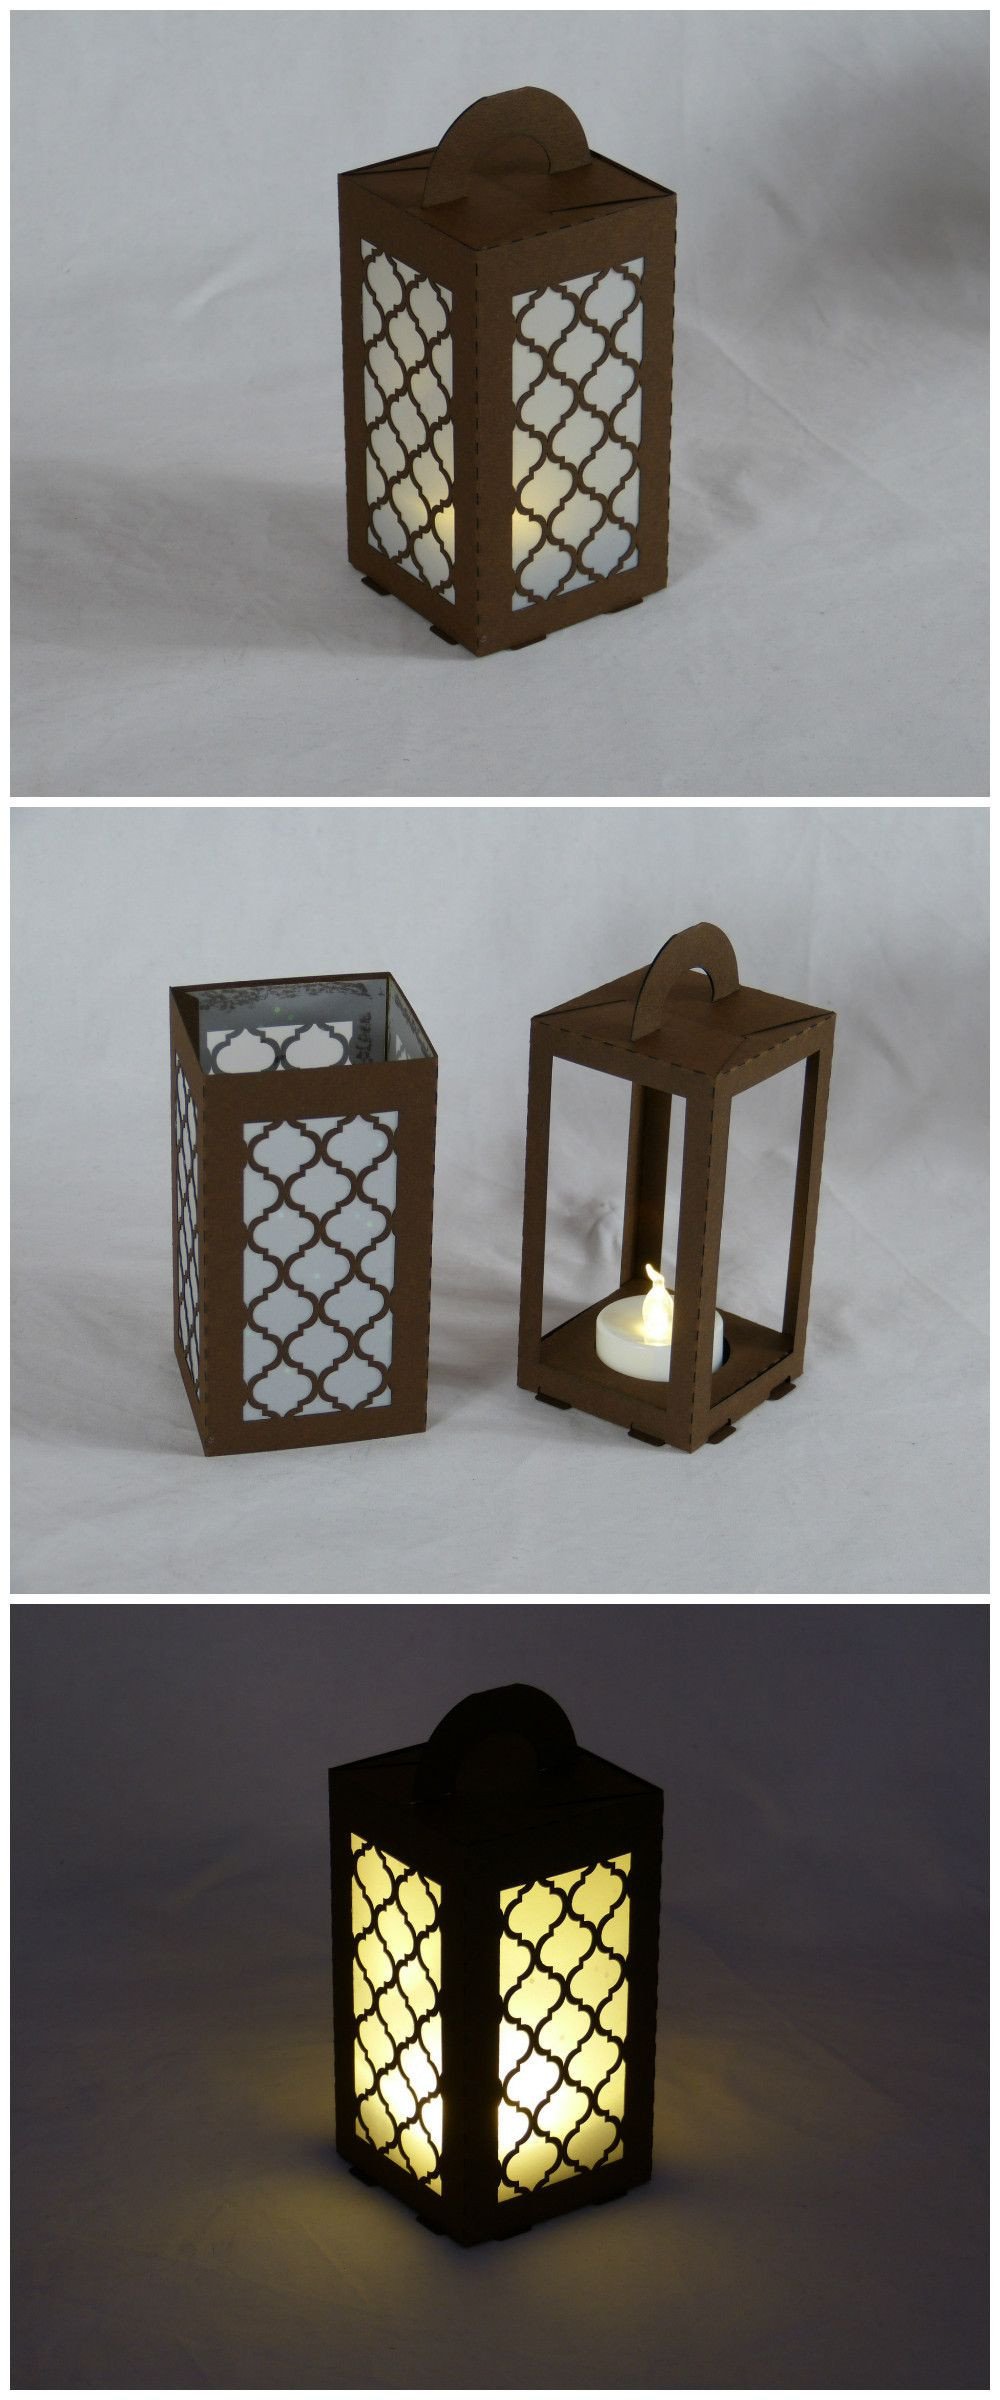 lasercut paper lantern for LED tea light "Moroccan